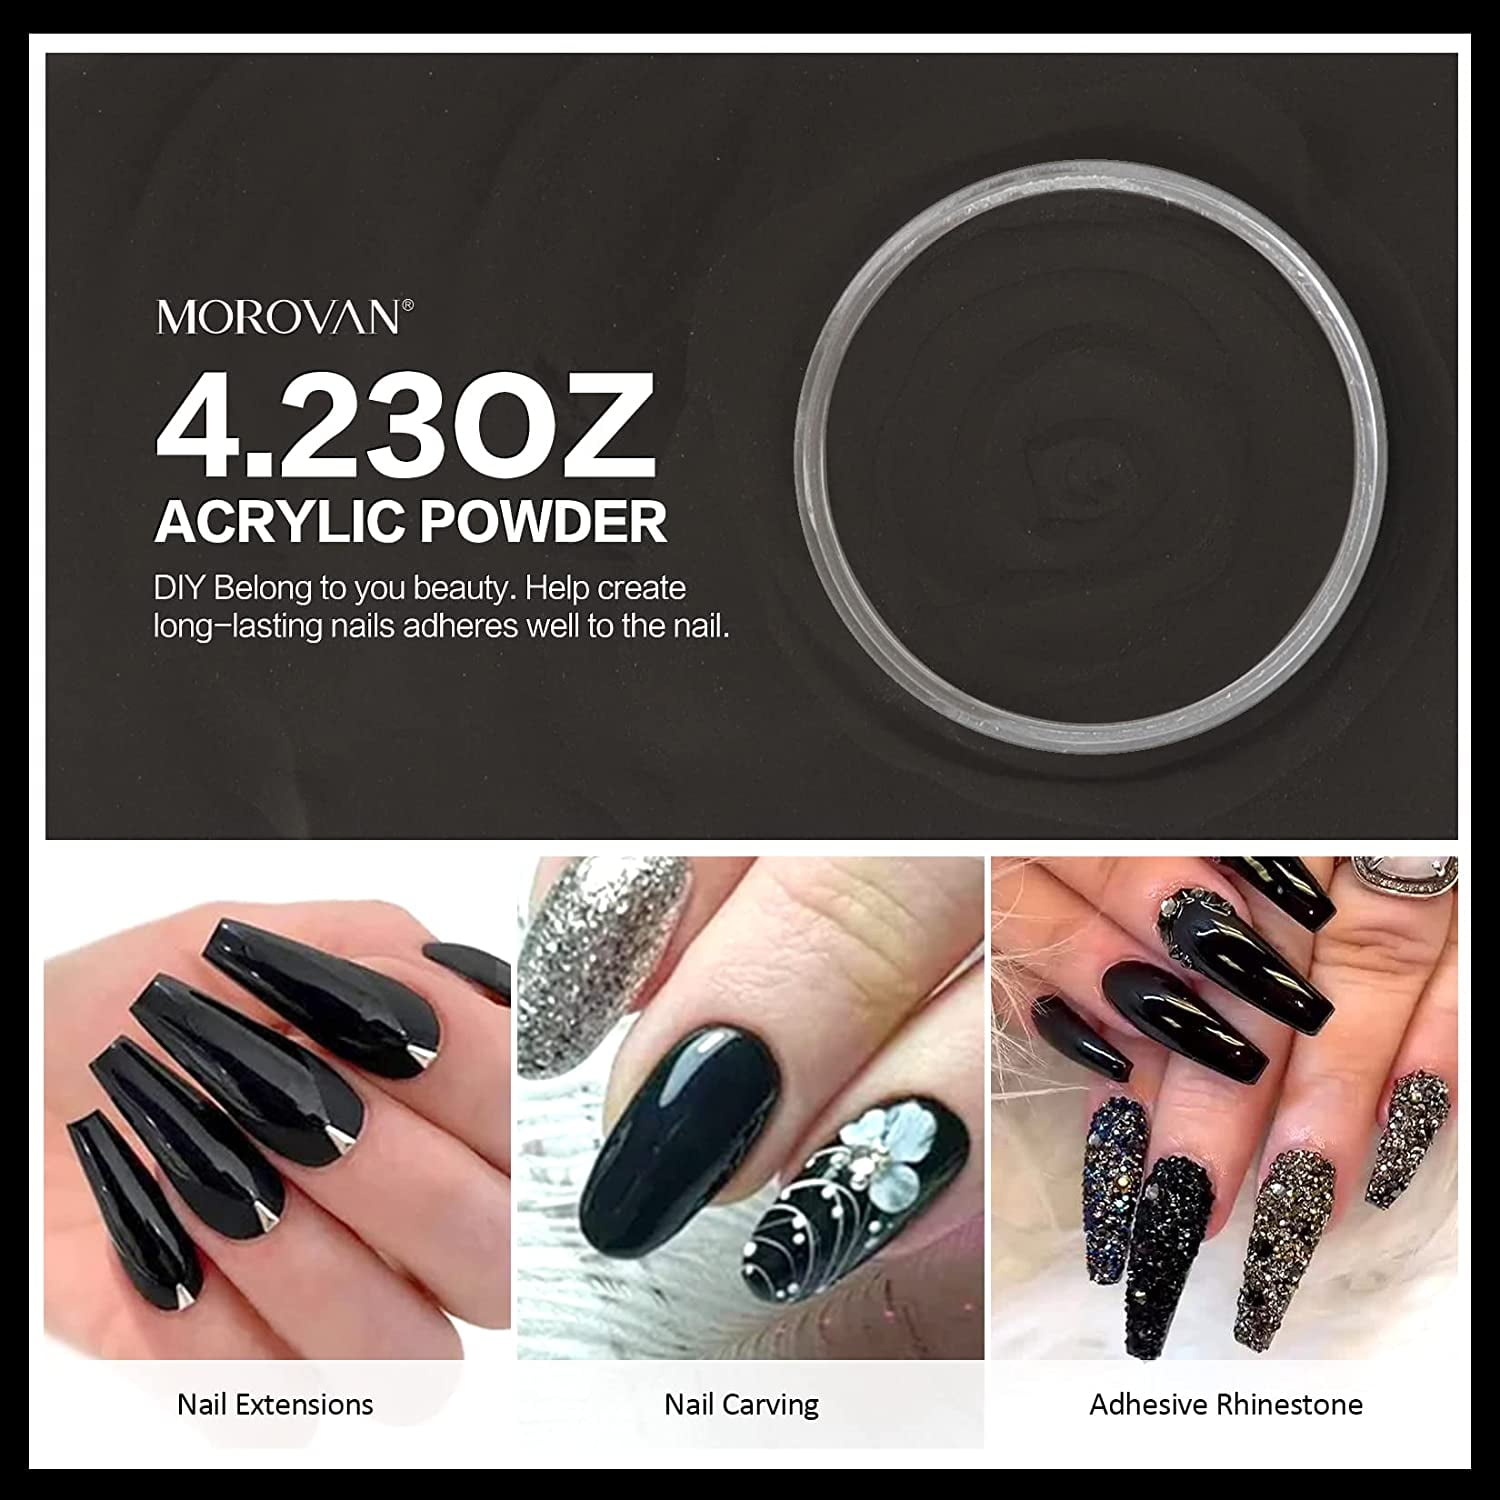  Acrylic Nail Powder - ORGANICOLORS (Black) by Organic